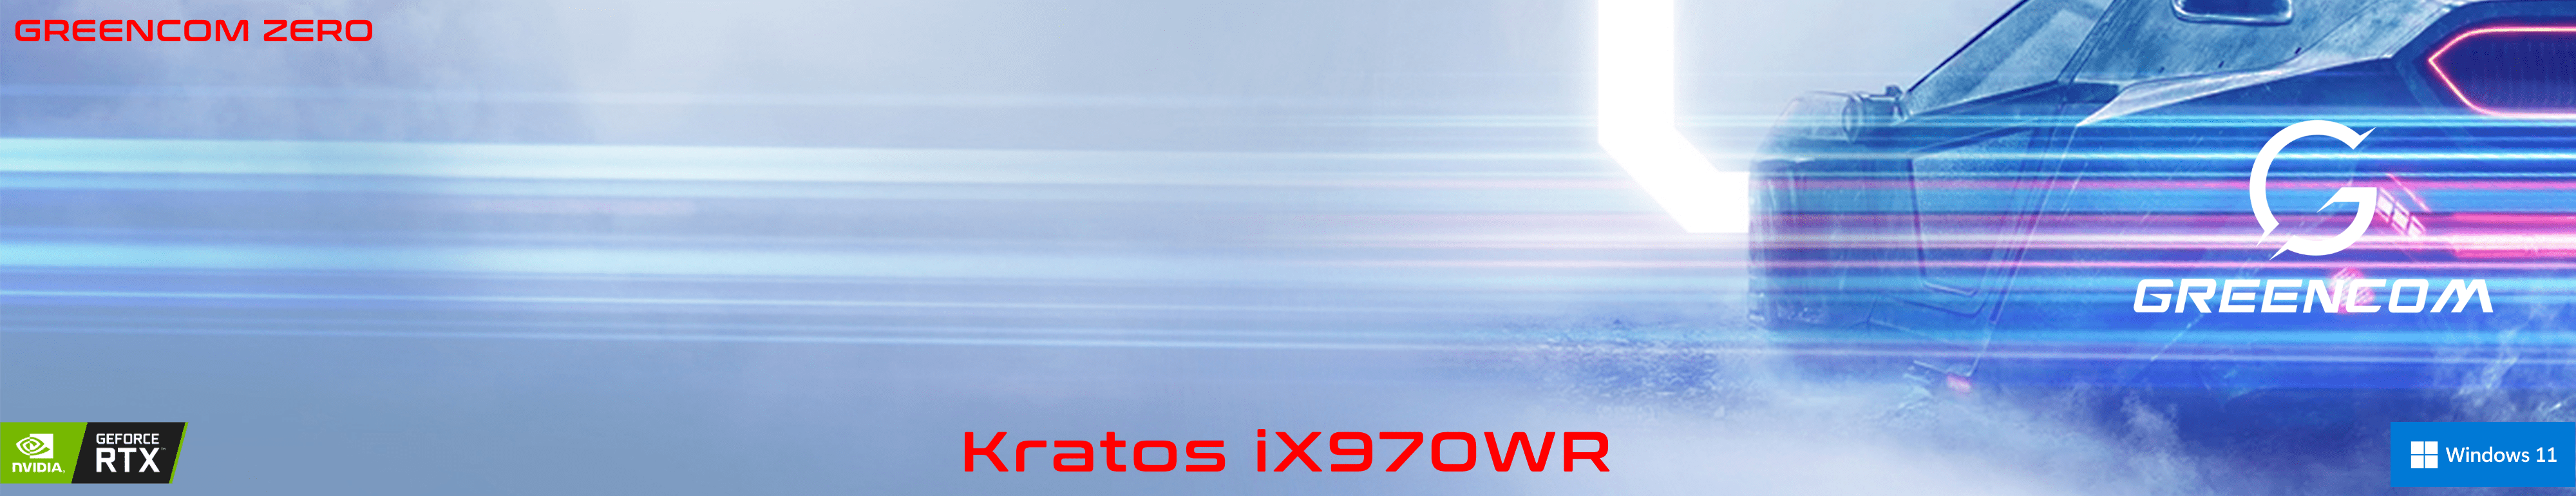 Greencom Kratos iX970WR Laptop